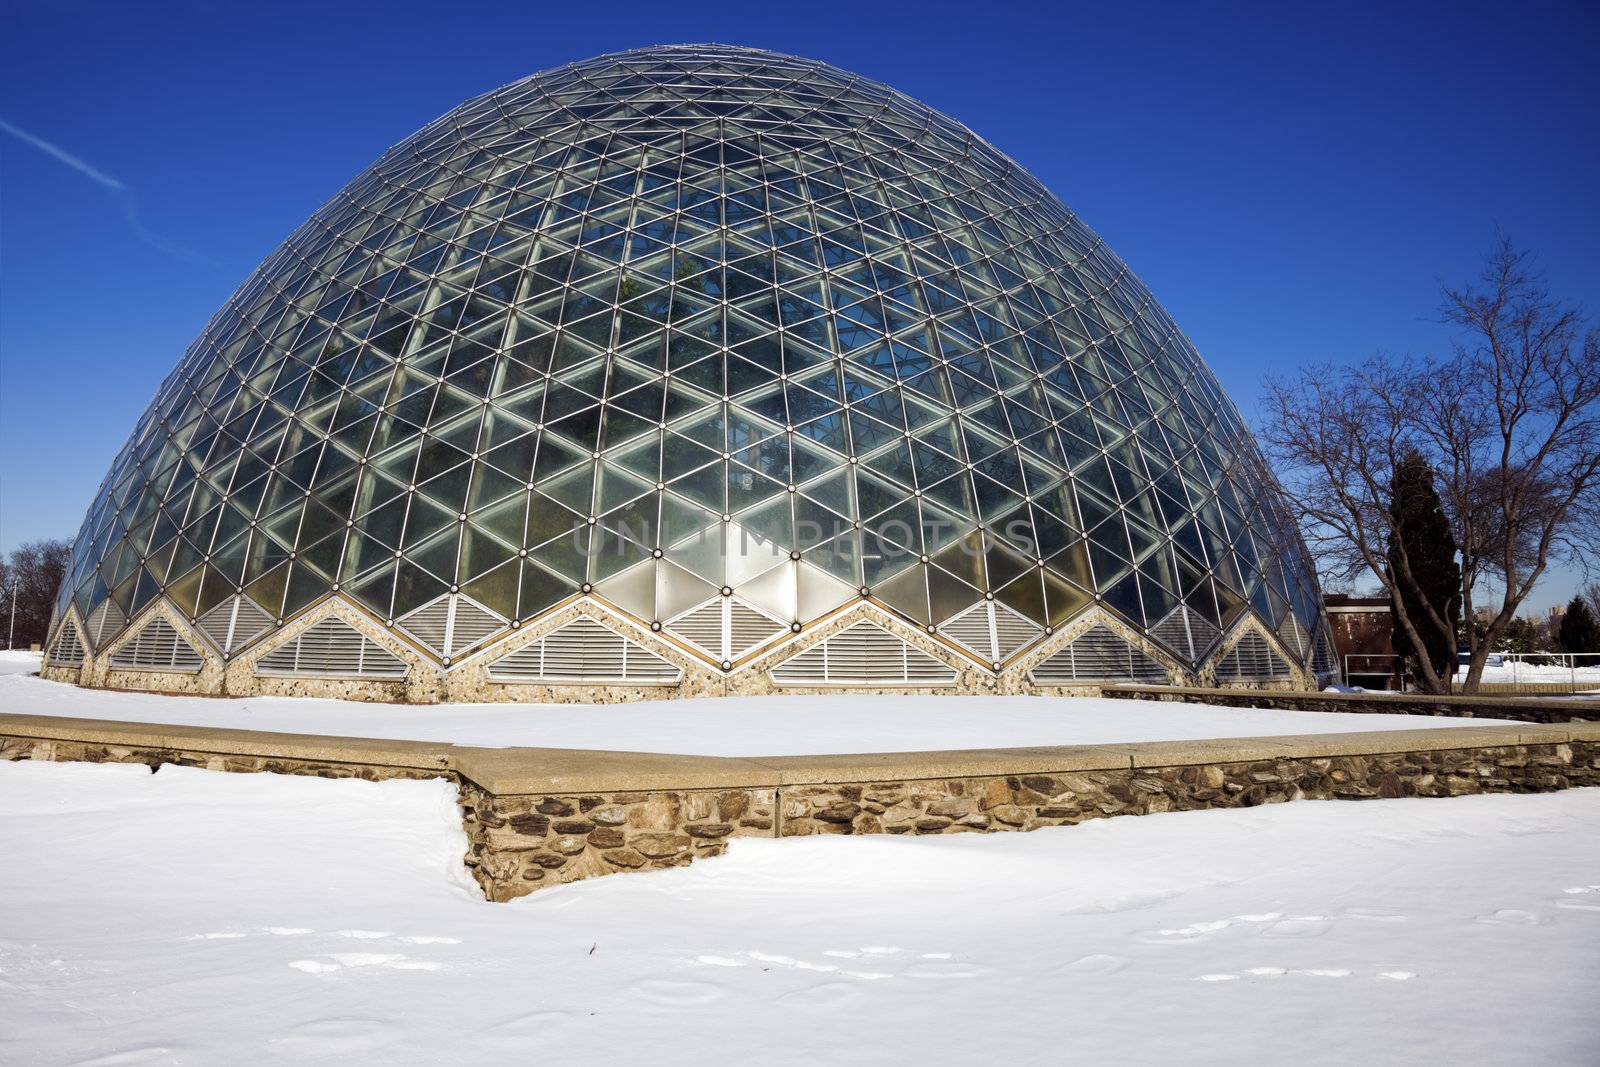 Dome of a Botanic Garden in Milwaukee, Wisconsin